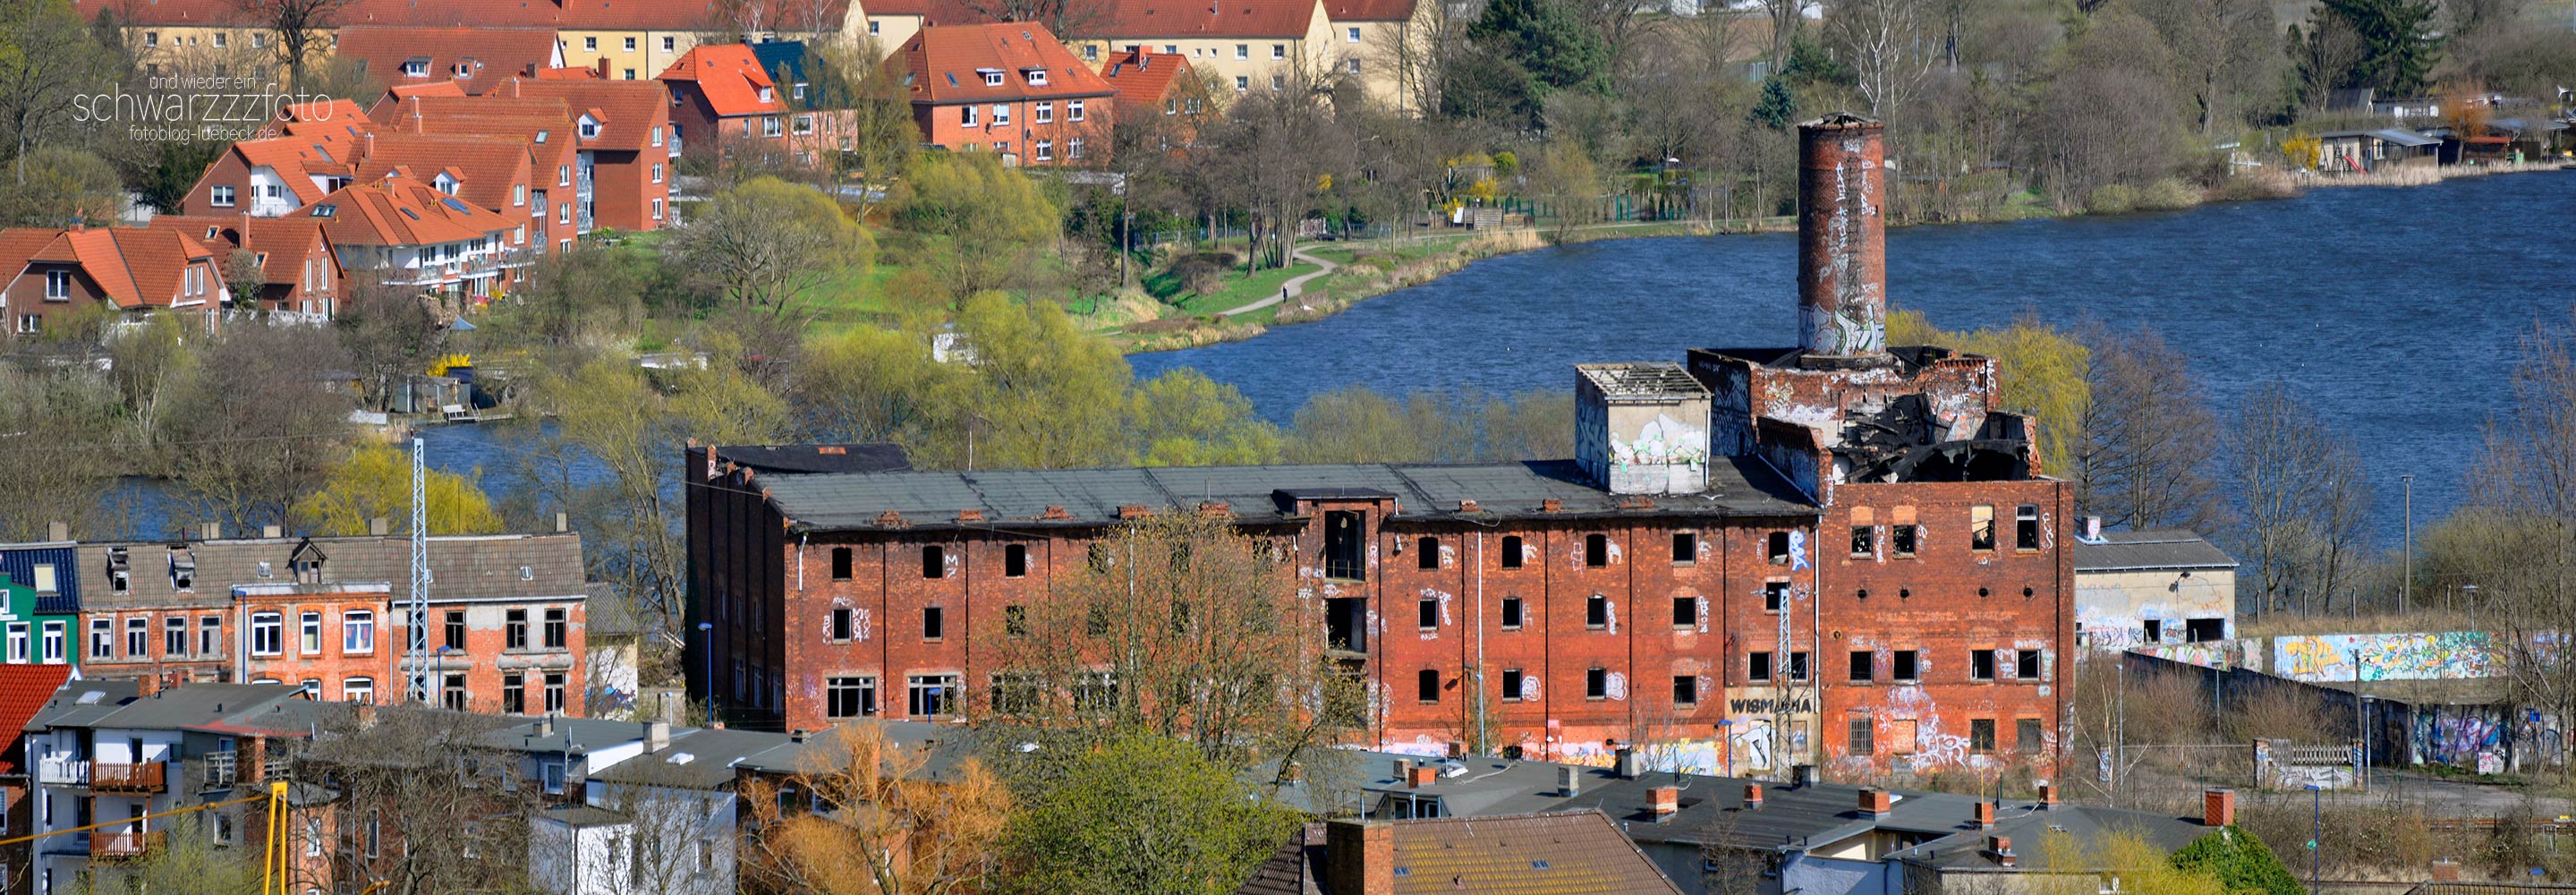 Wismar-Panorama-2015